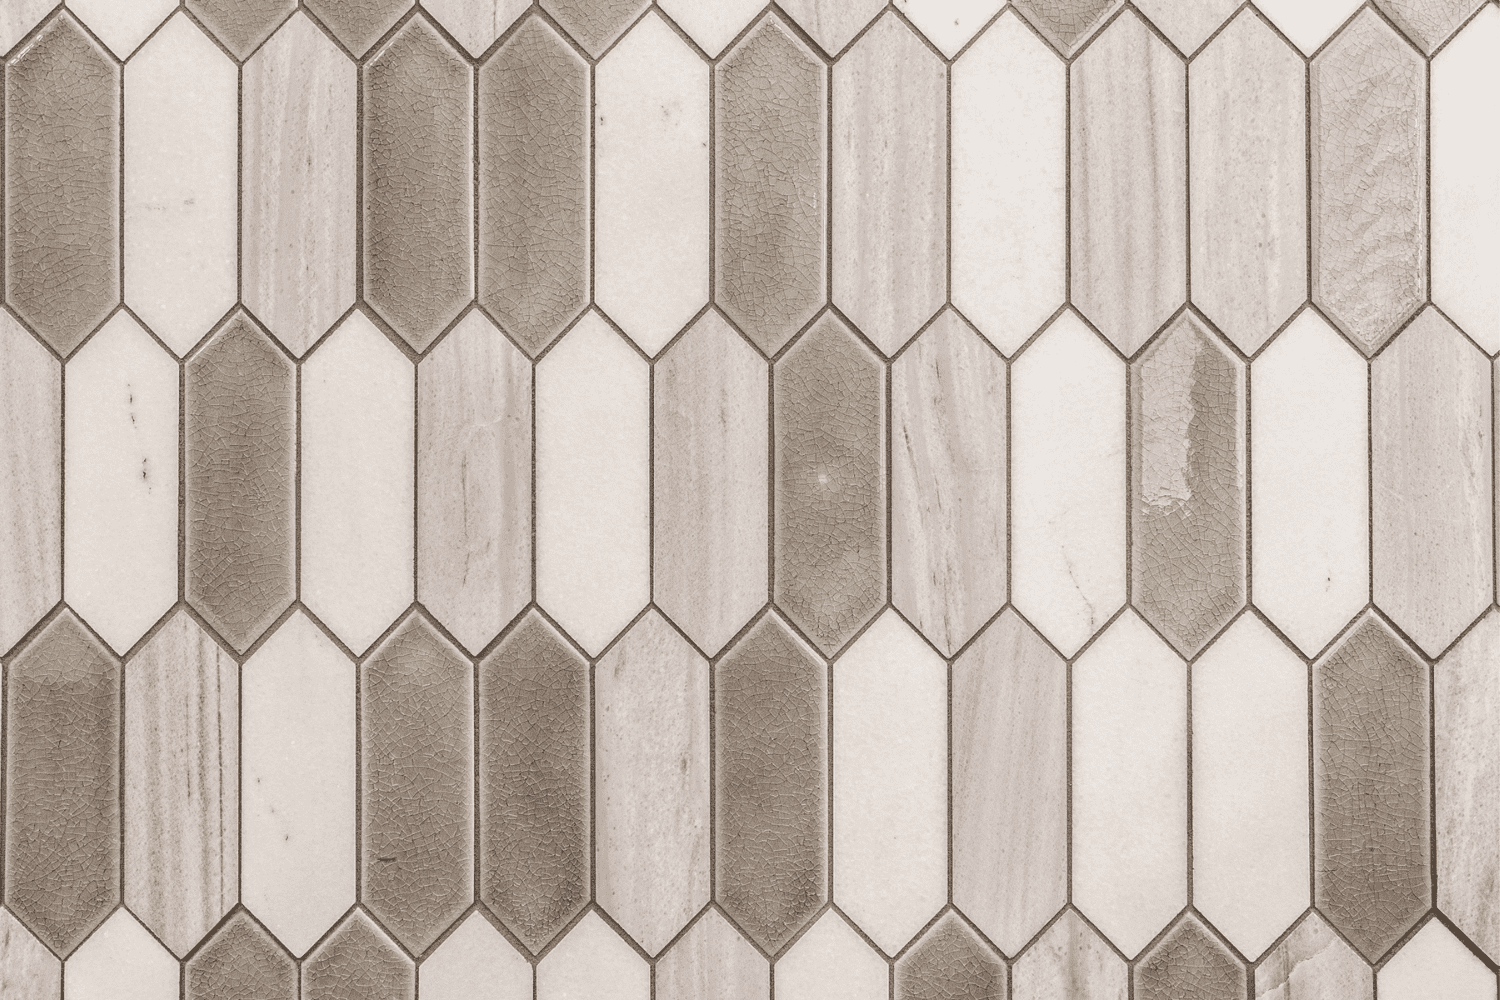 Nicholas Design Build | A close up image of a tiled wall.